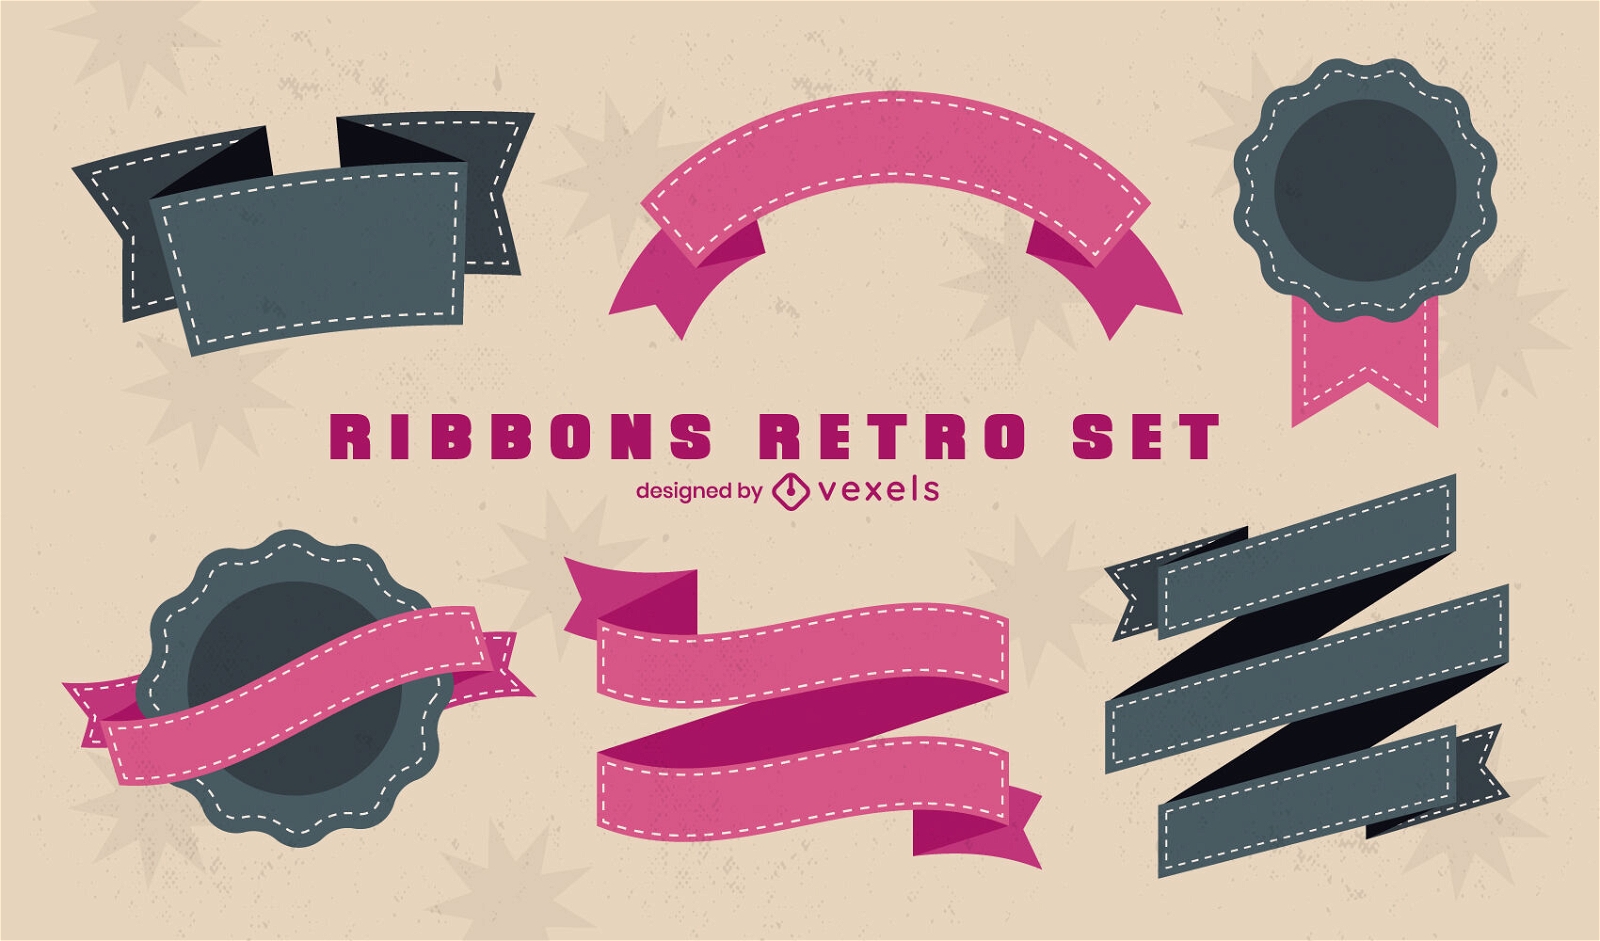 Retro stitched ribbons set